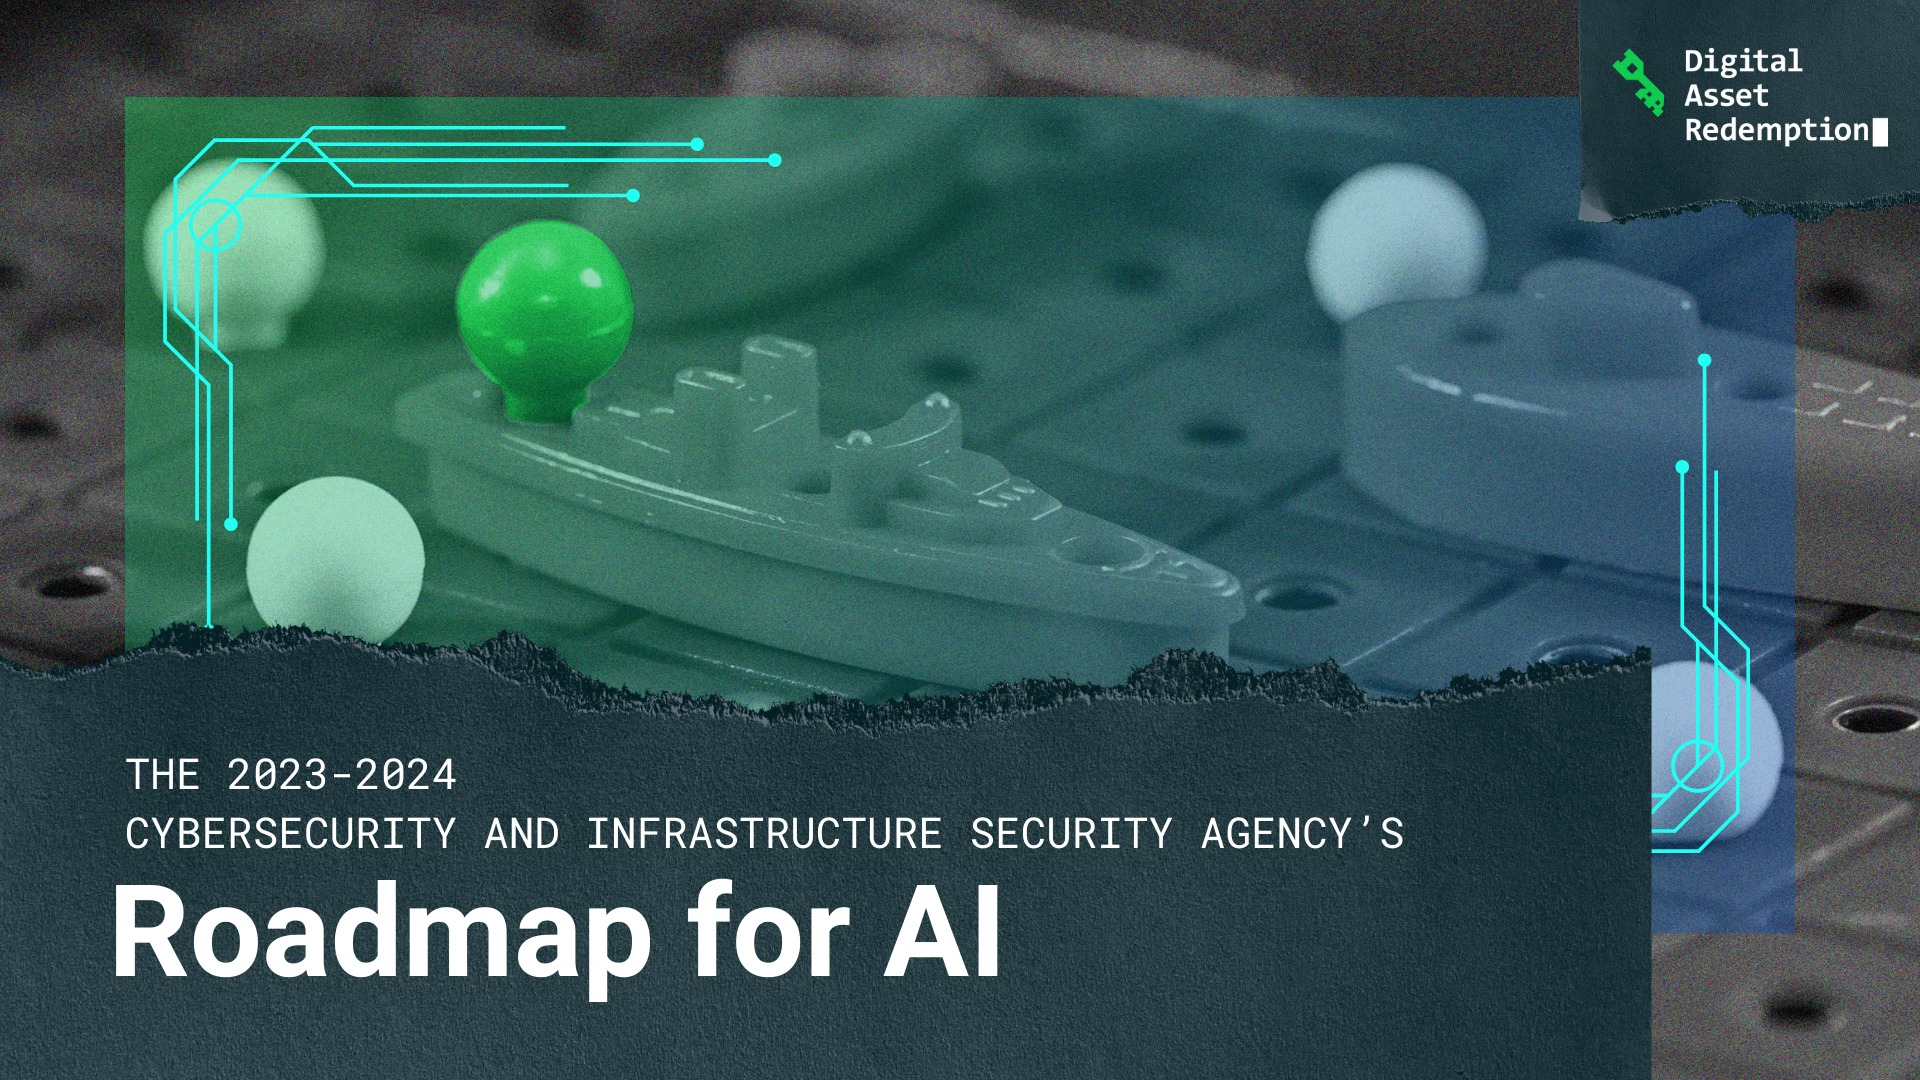 CISA’s 2023-2024 Roadmap for AI